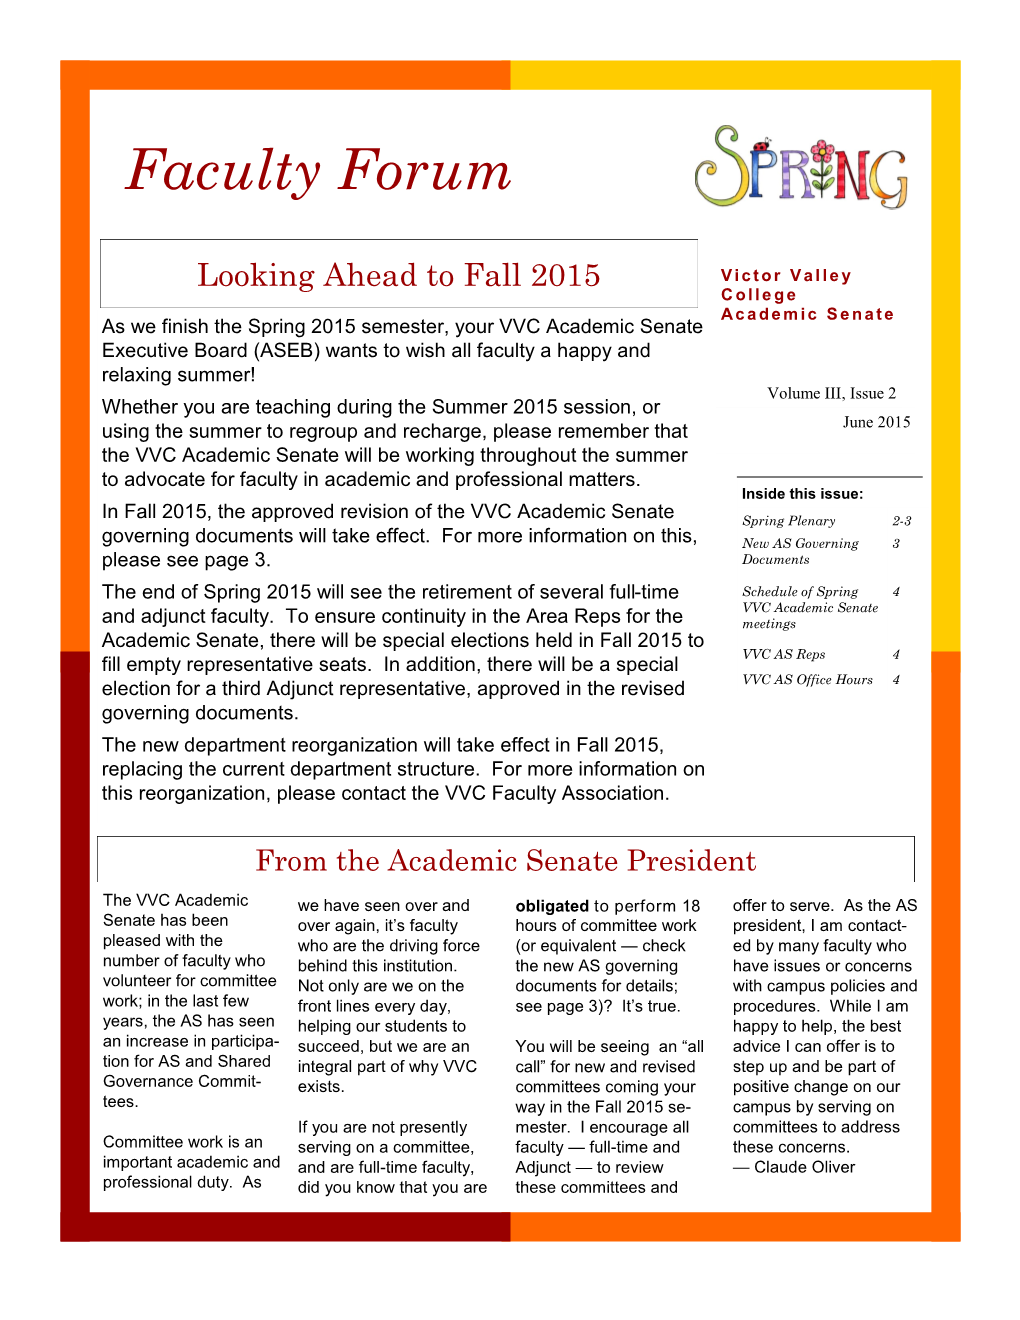 Faculty Forum